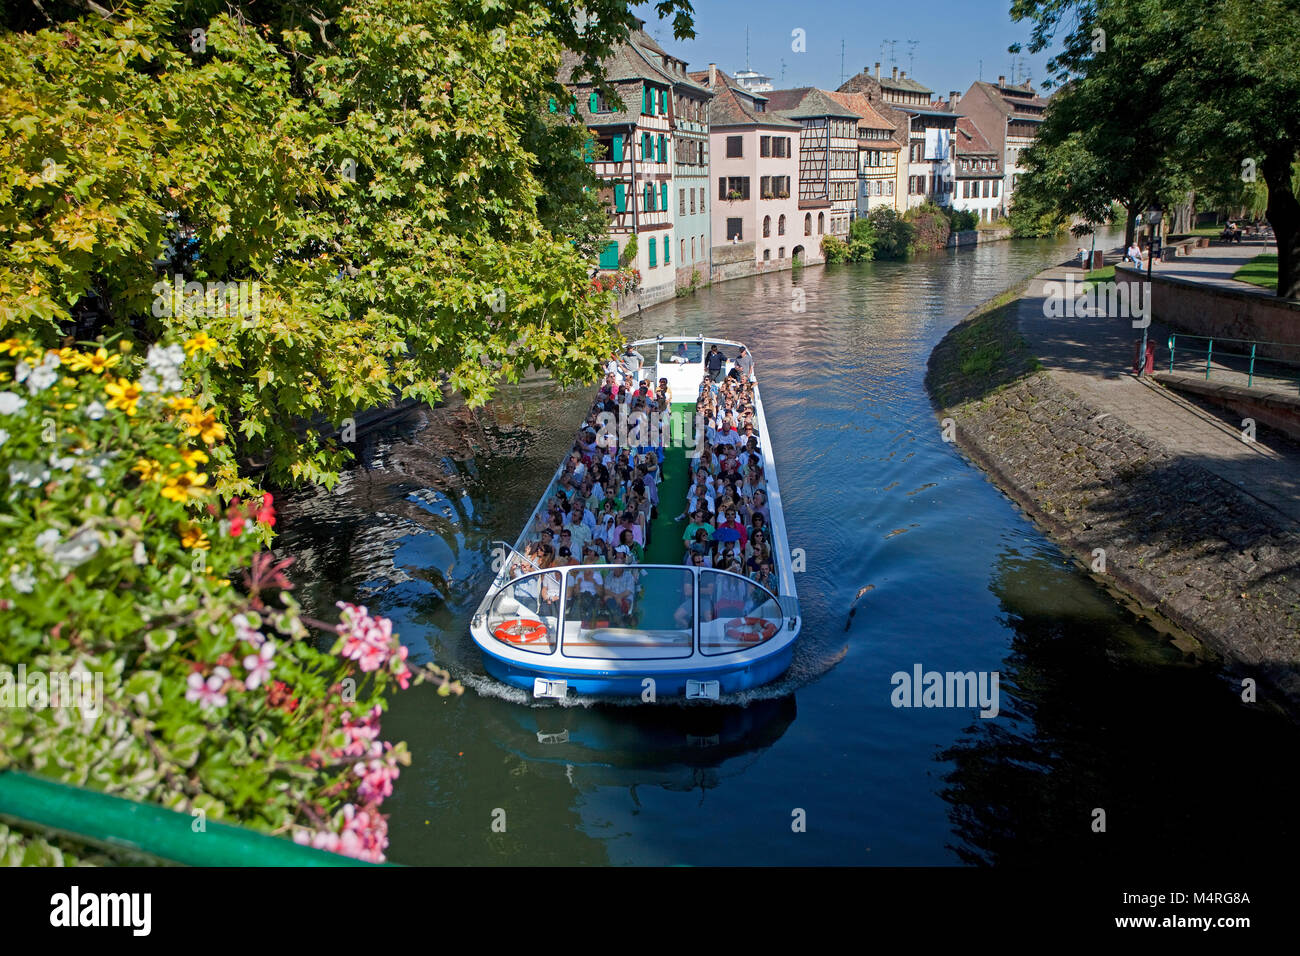 Boat trip on Ill river, La Petite France (Little France), Strasbourg, Alsace, Bas-Rhin, France, Europe Stock Photo